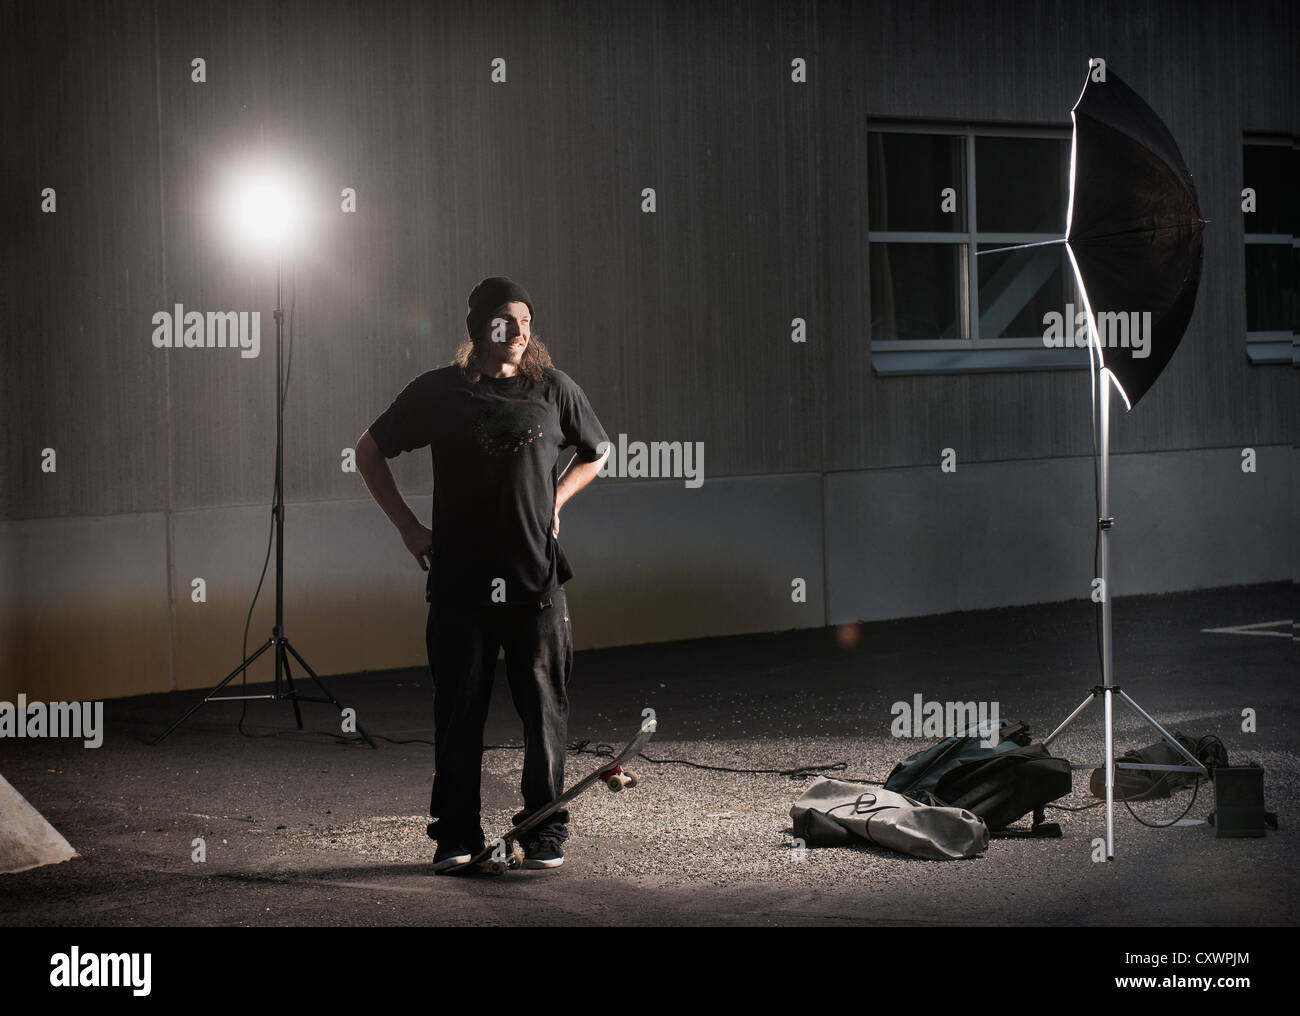 Skater standing under photo lights Stock Photo